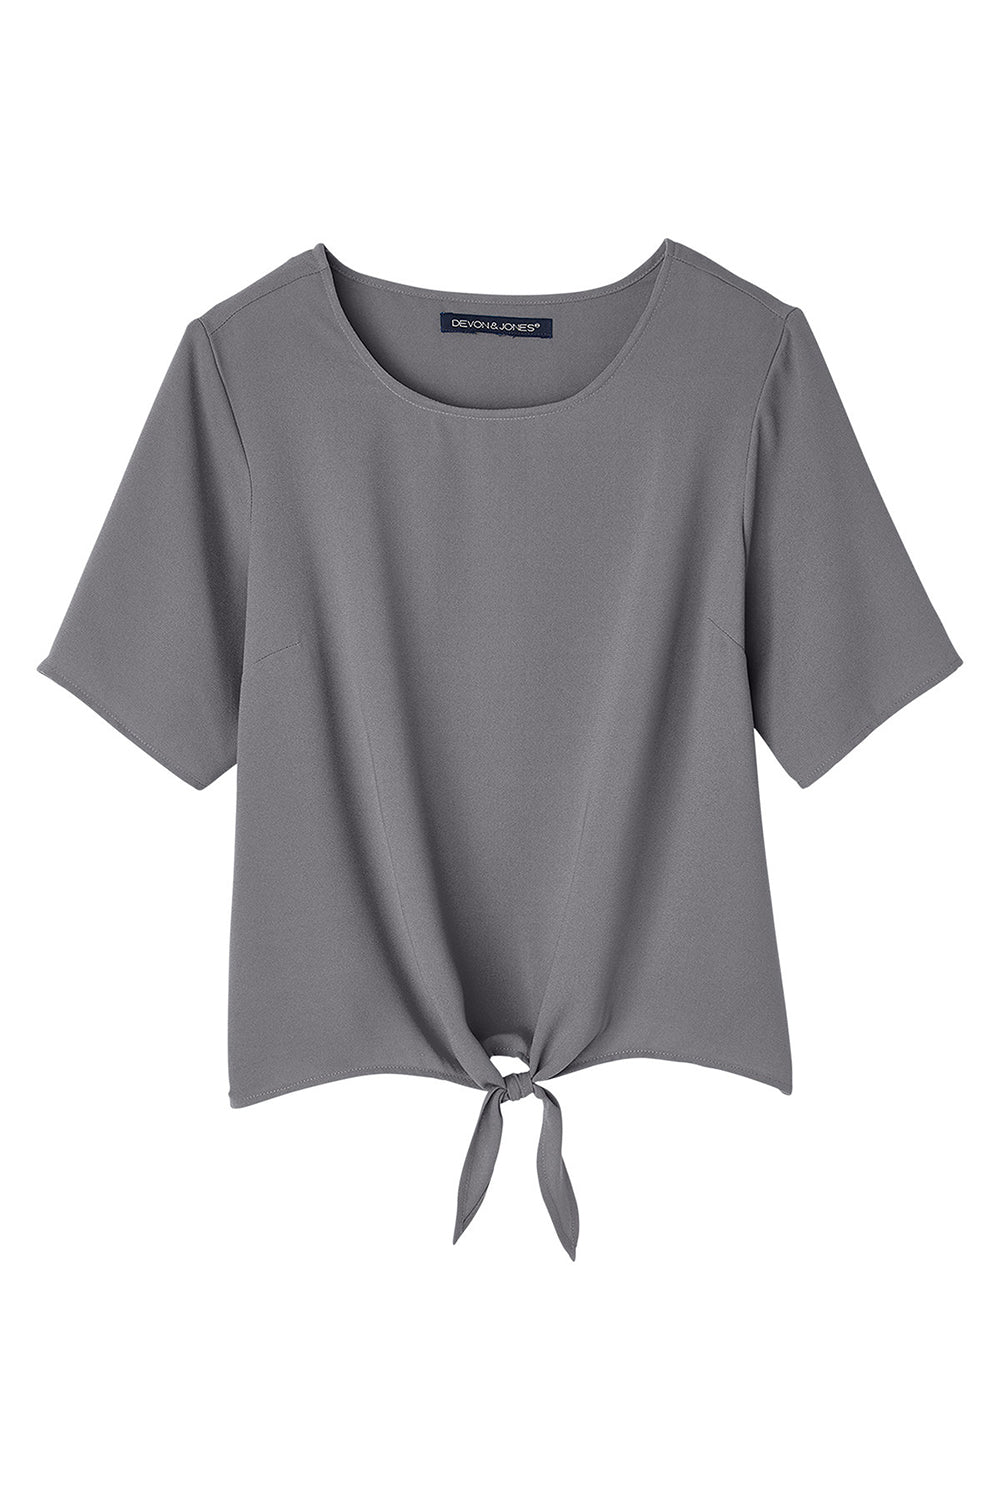 Devon & Jones DP617W Womens Perfect Fit Tie Front Short Sleeve Blouse Graphite Grey Flat Front